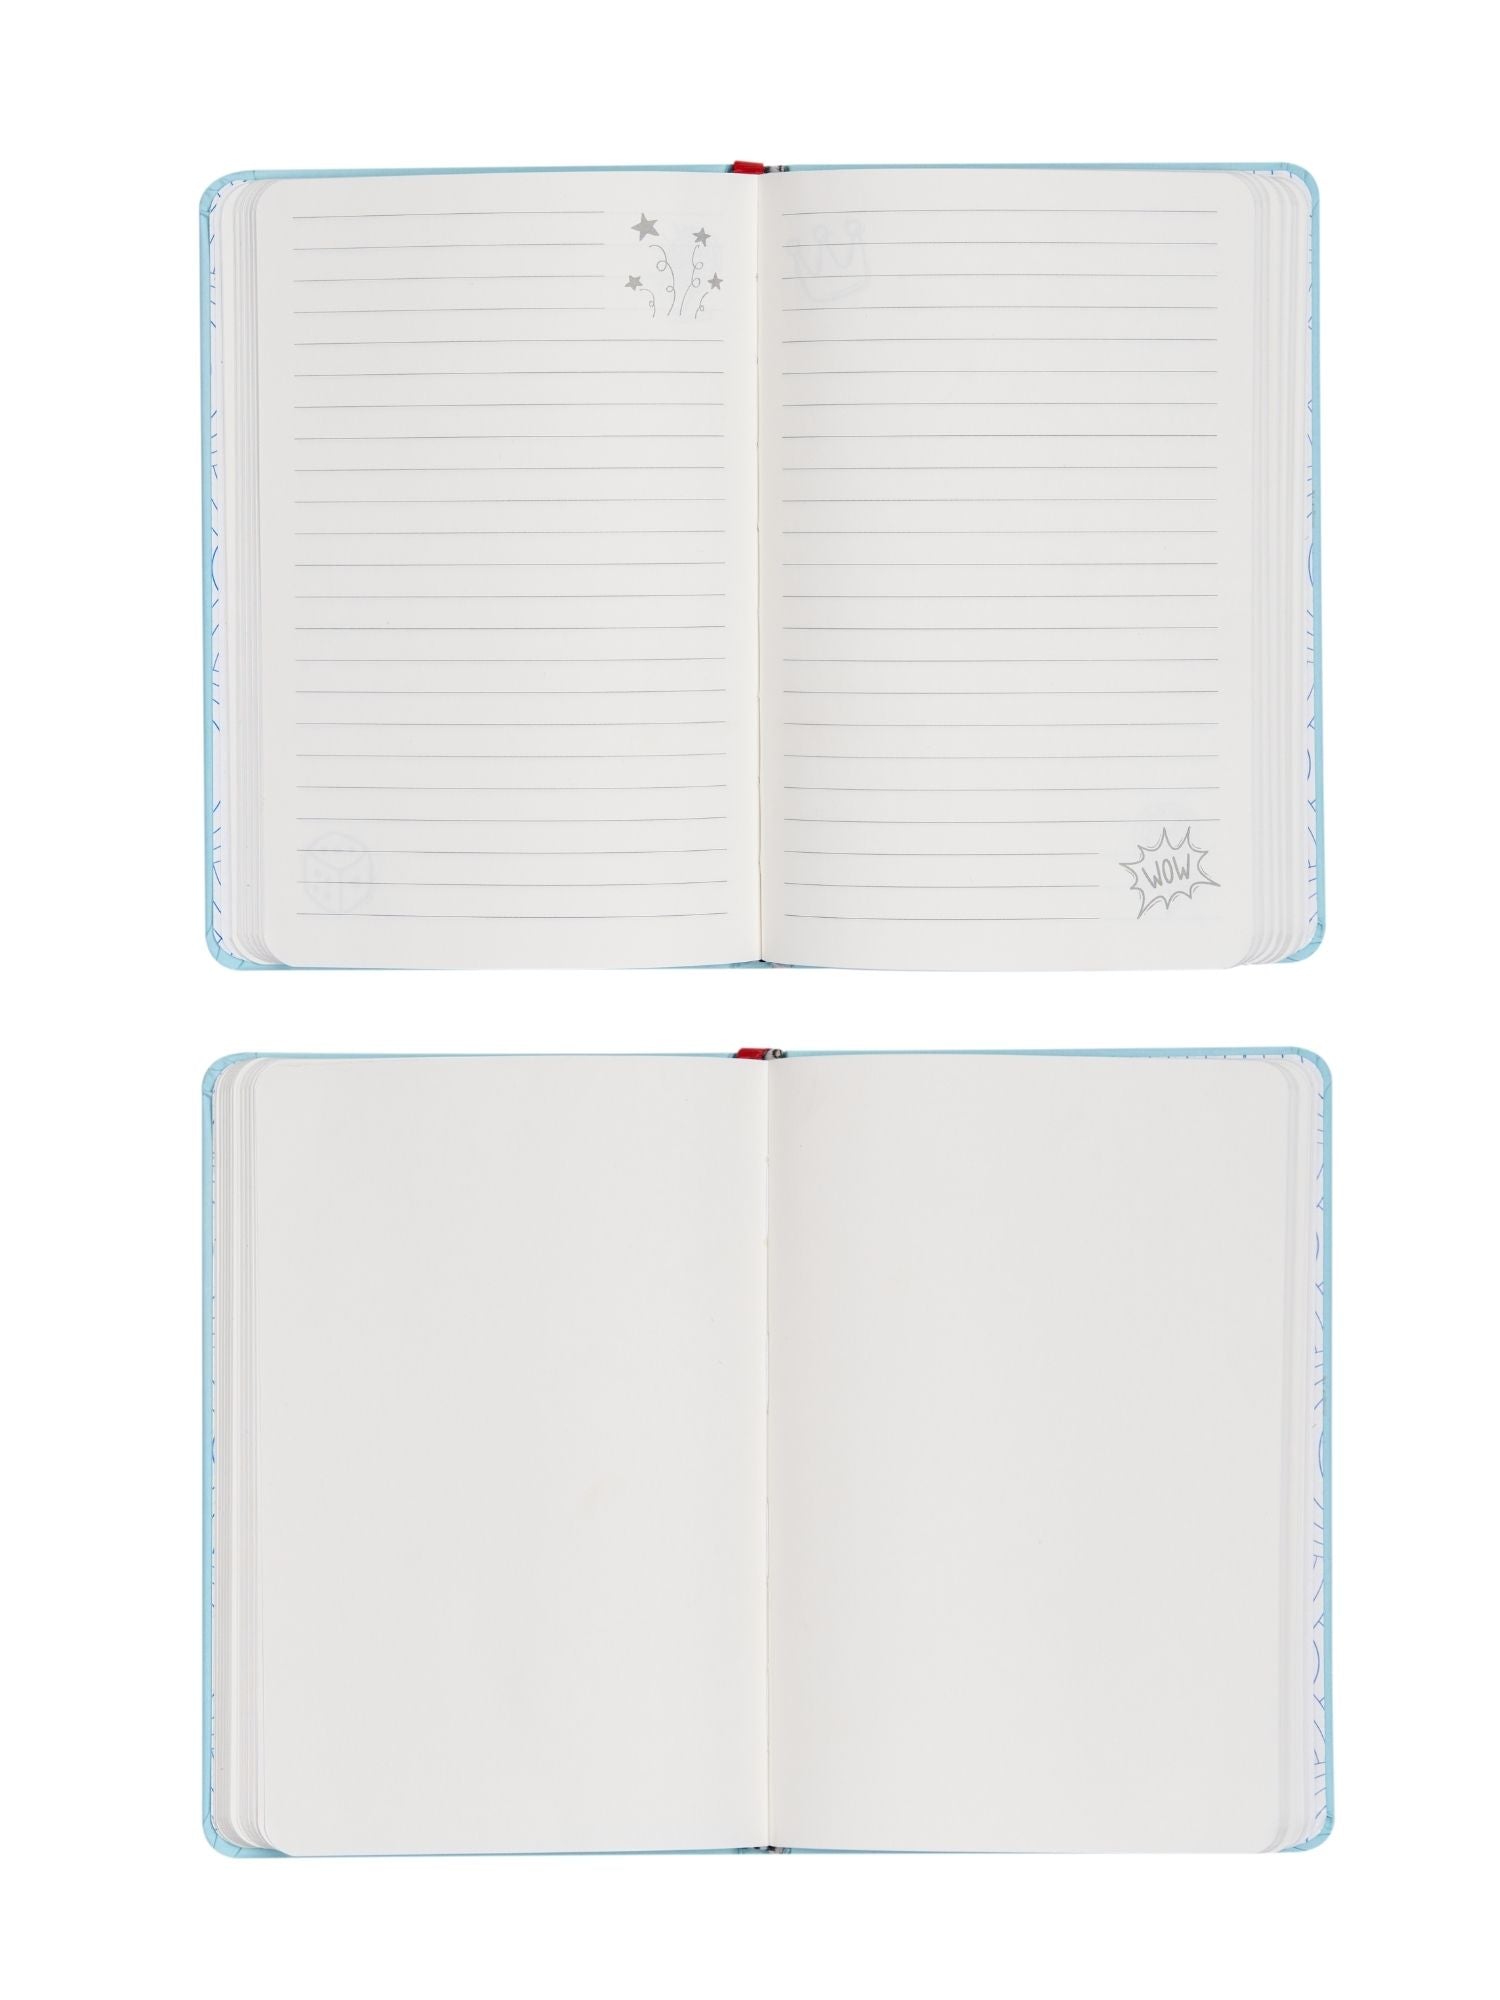 Doodle Initial U Stripes Theme Premium Hard Bound B6 Notebook Diary